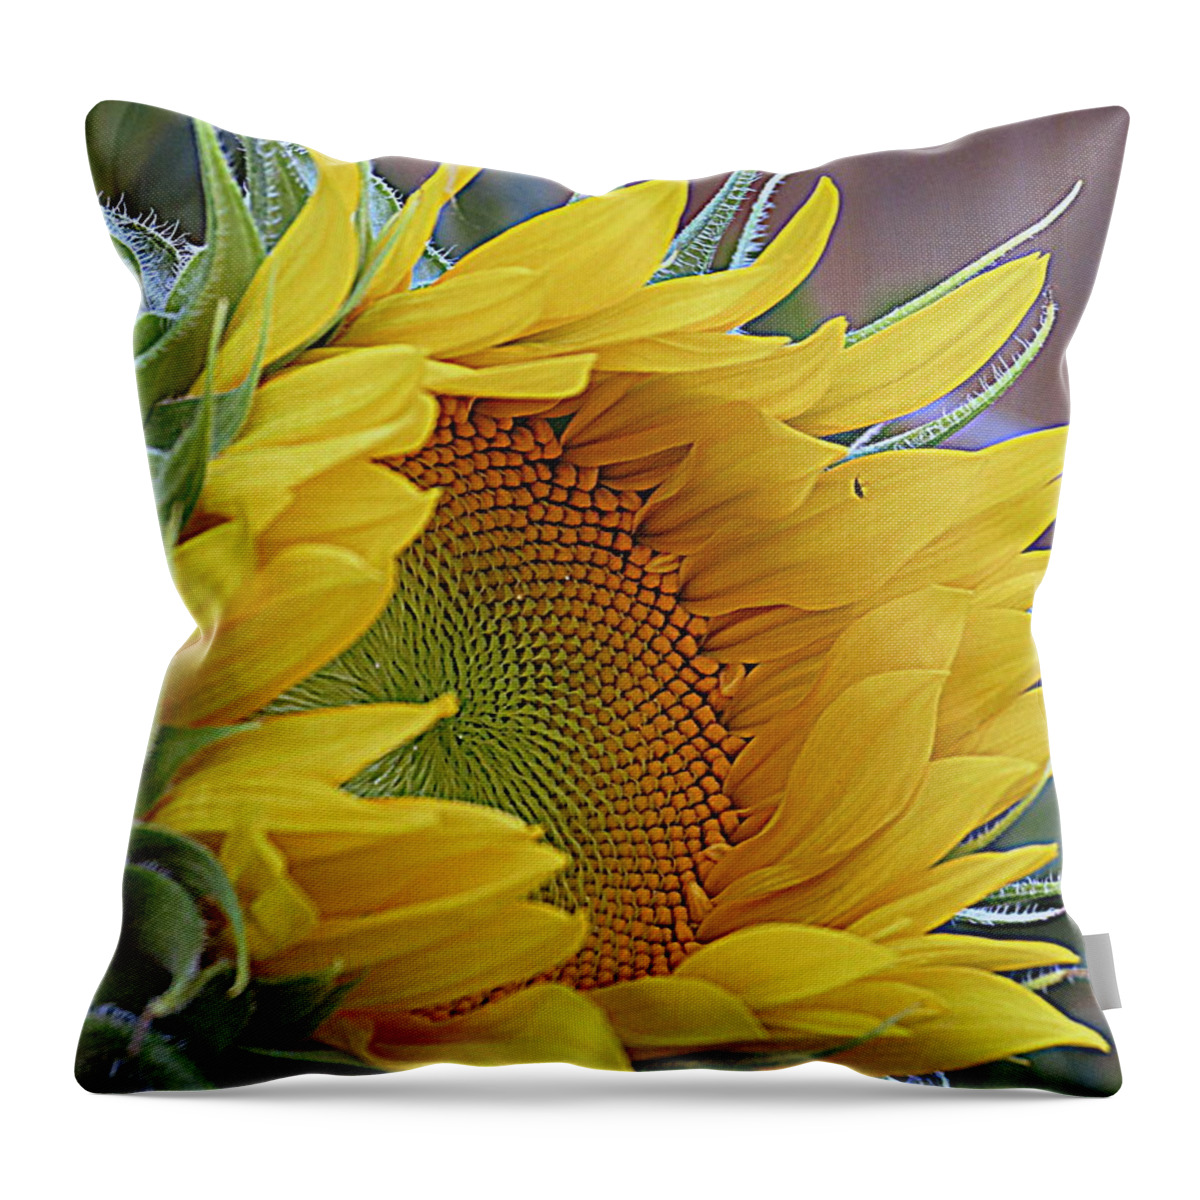 Wisconsin Throw Pillow featuring the photograph Sunflower Awakening by Kay Novy